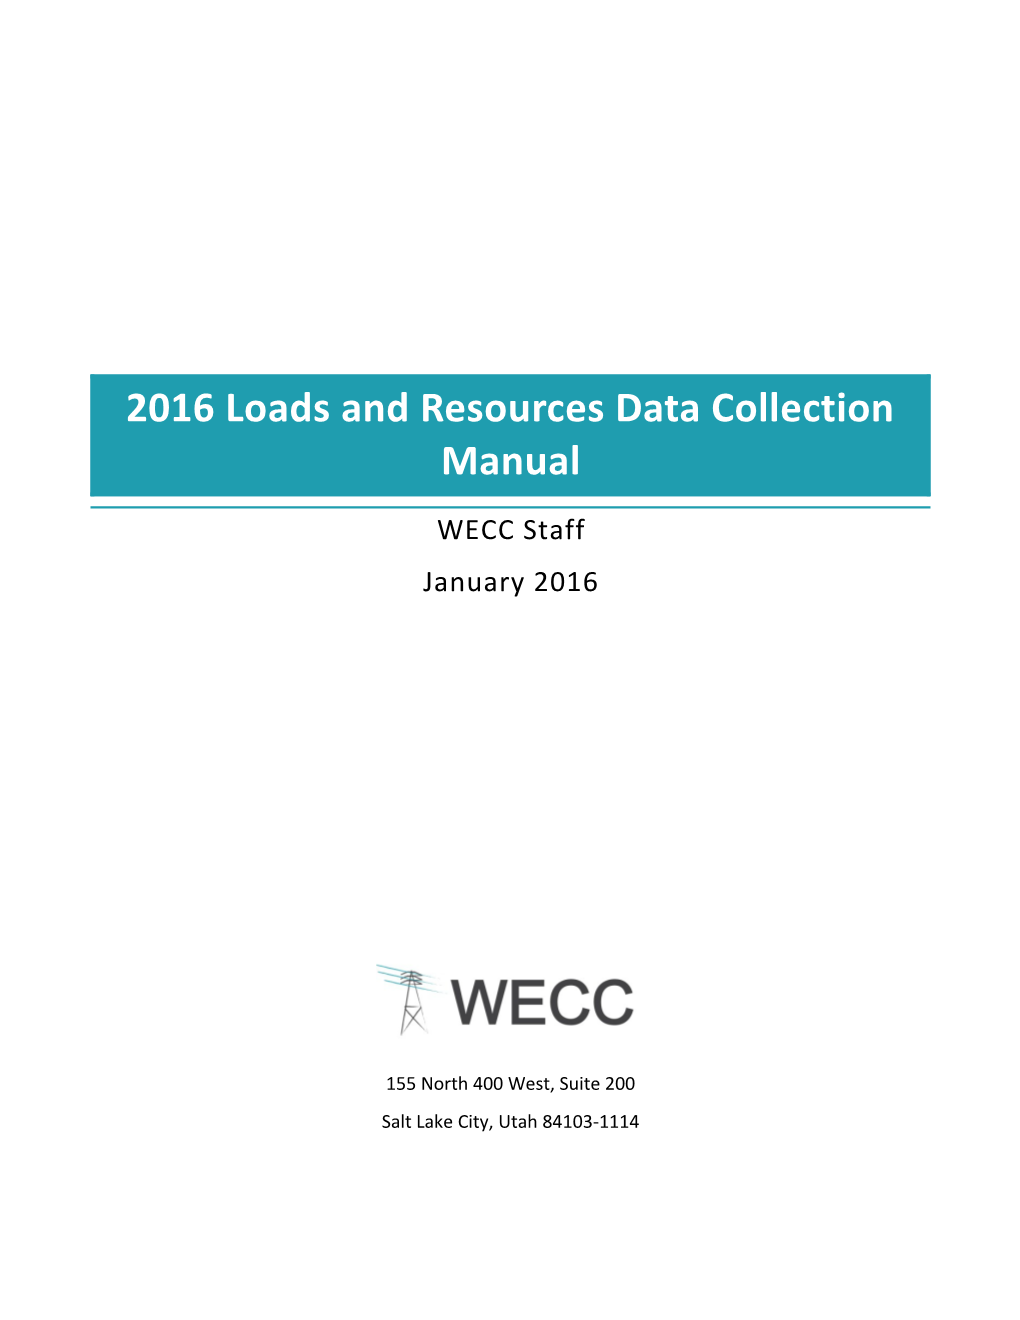 LAR Data Collection Manual